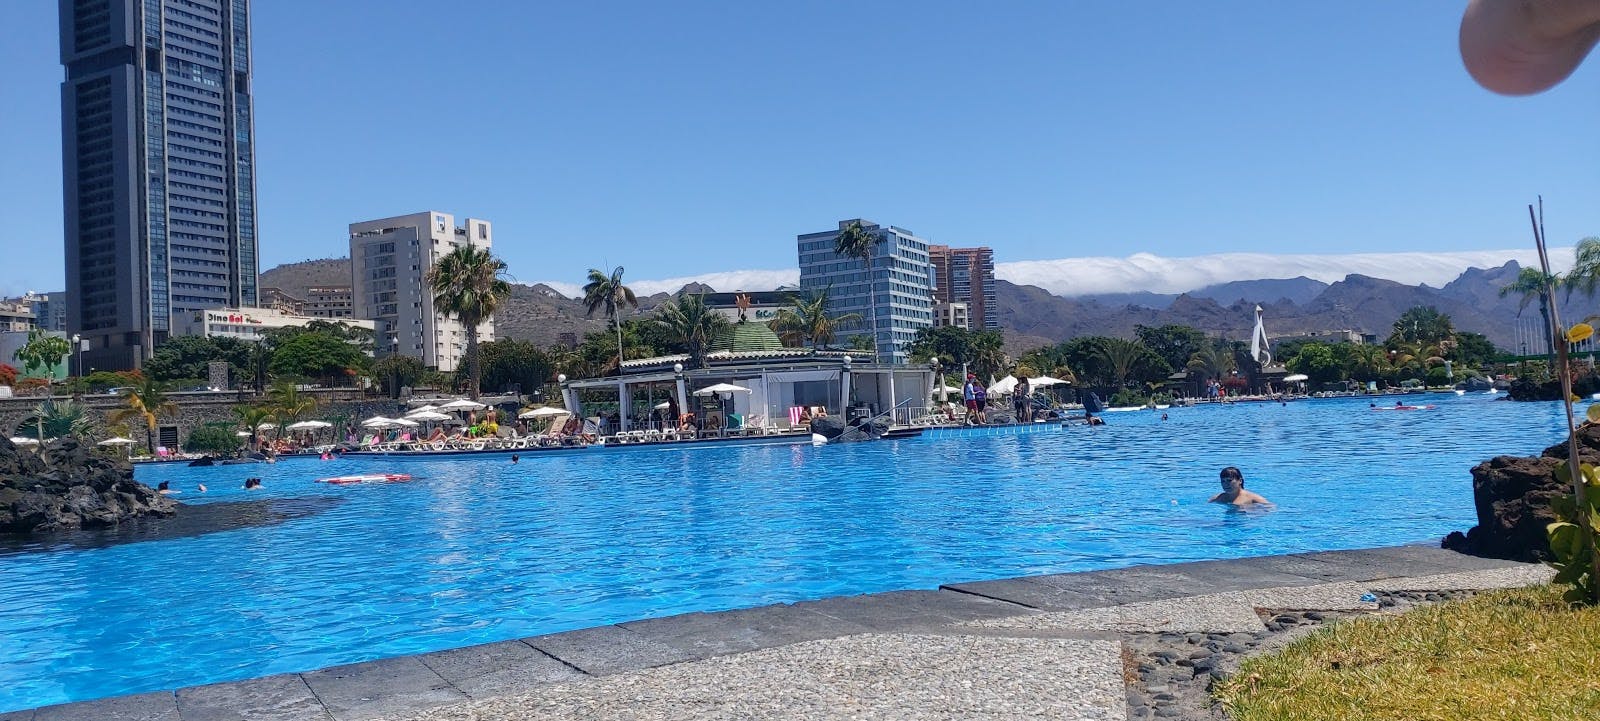 Image - Santa Cruz de Tenerife